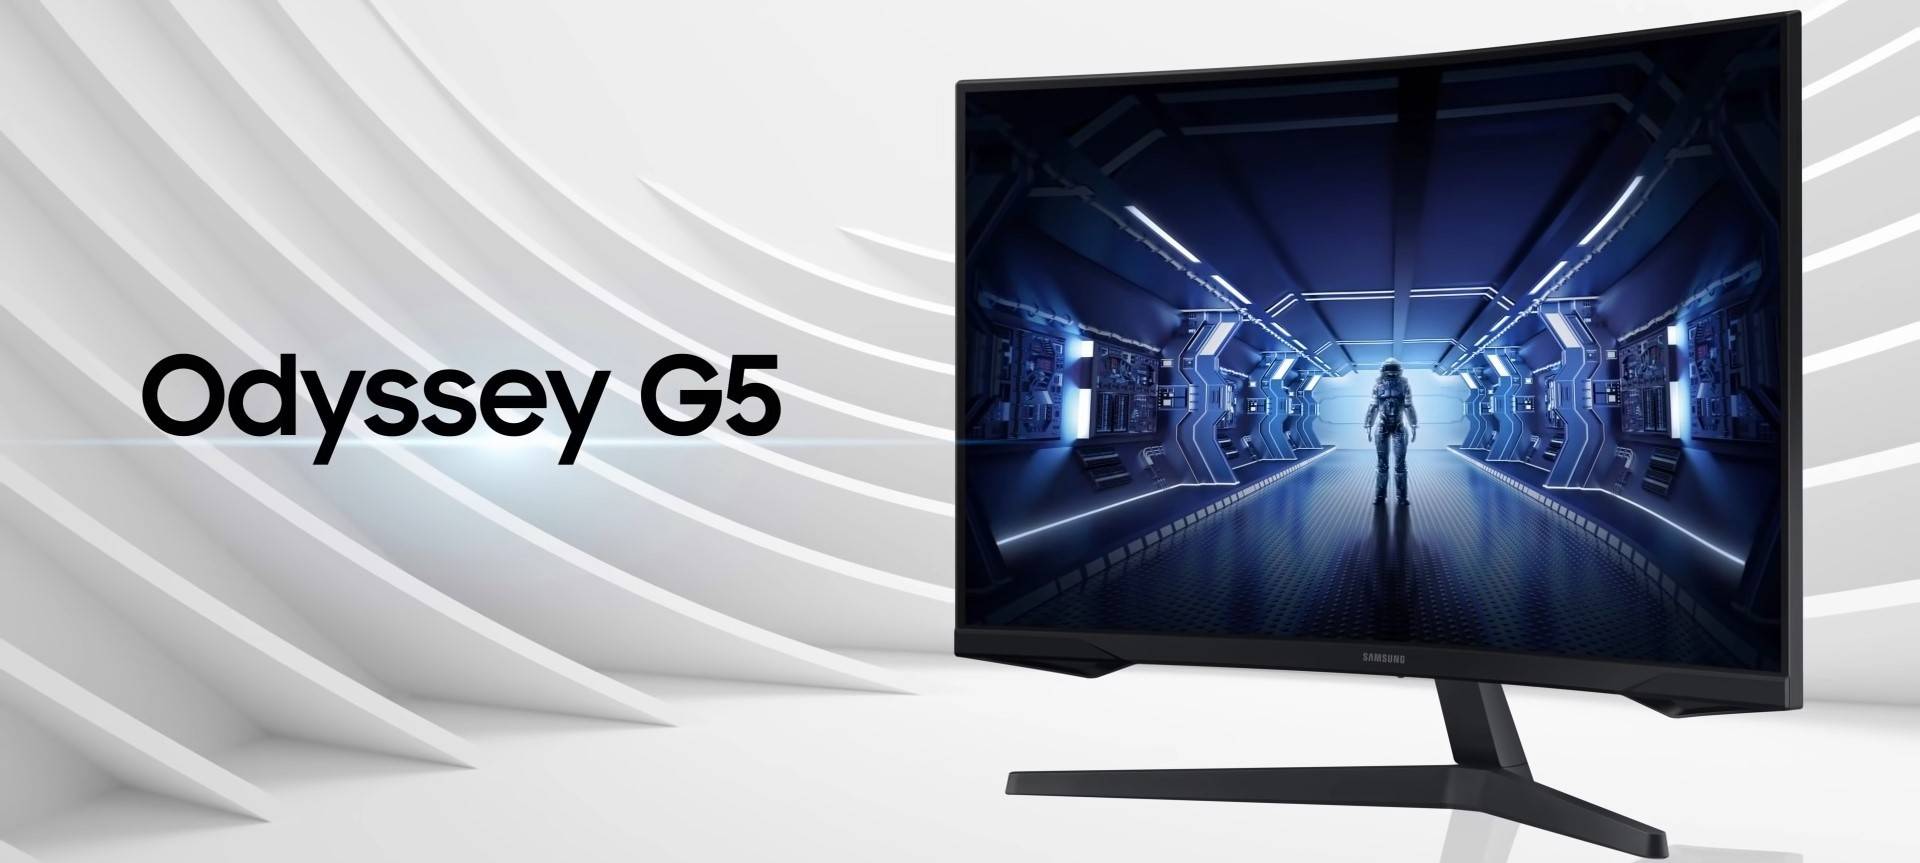 Samsung Odyssey G5 Series Long